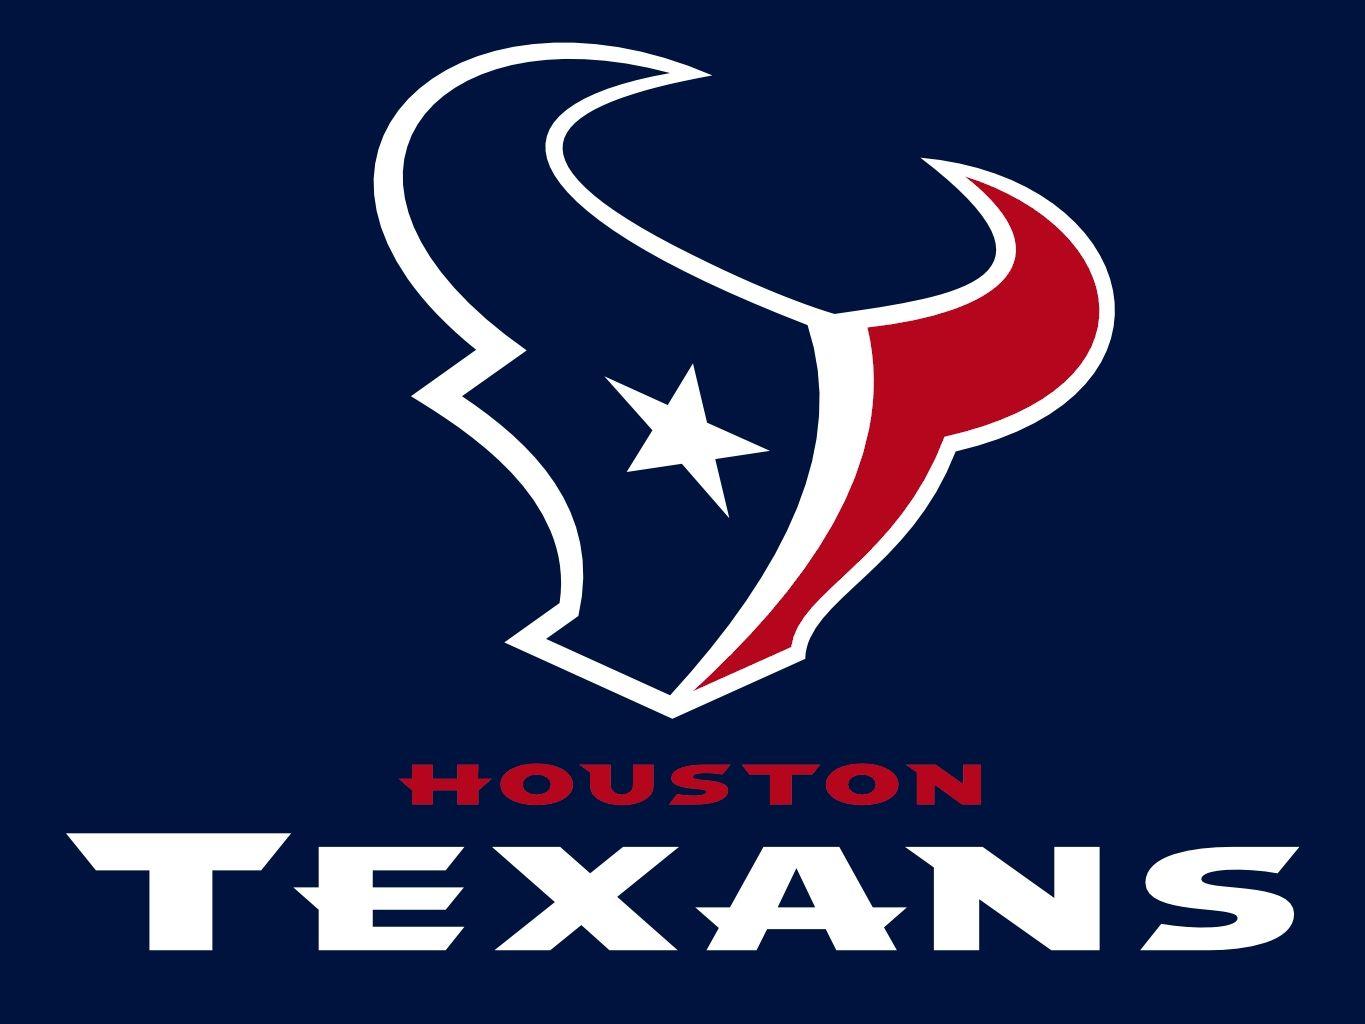 NFL Texans Logo - Free Houston Texans Logo, Download Free Clip Art, Free Clip Art on ...